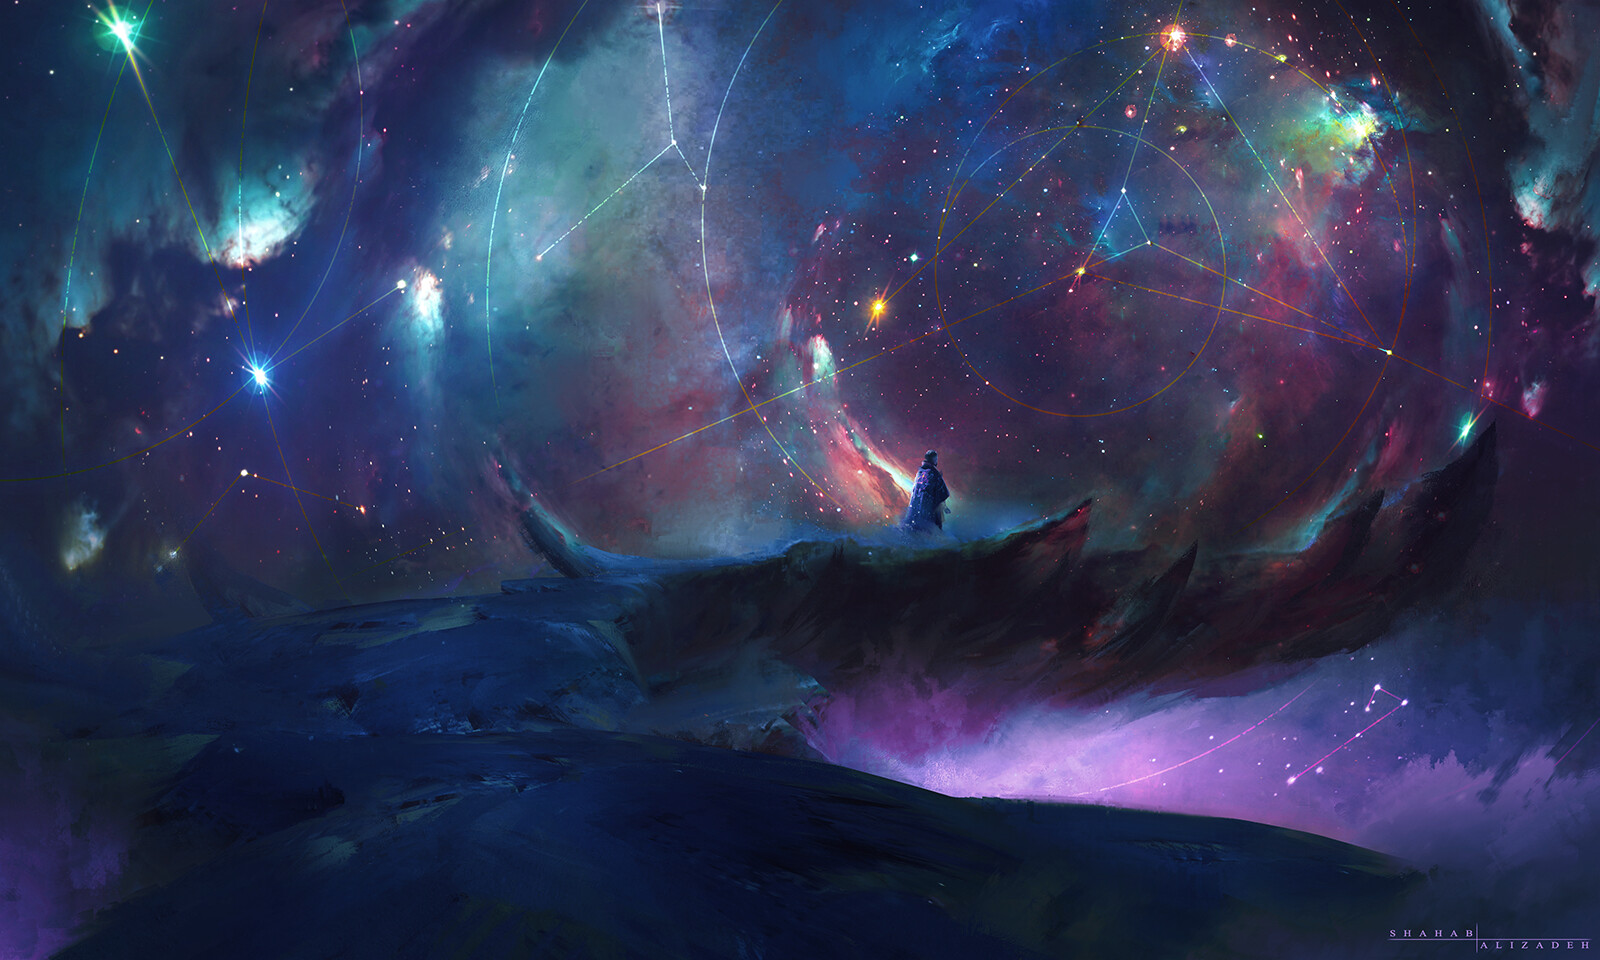 Shahab Alizadeh Nebula Sky Space Digital 1600x960